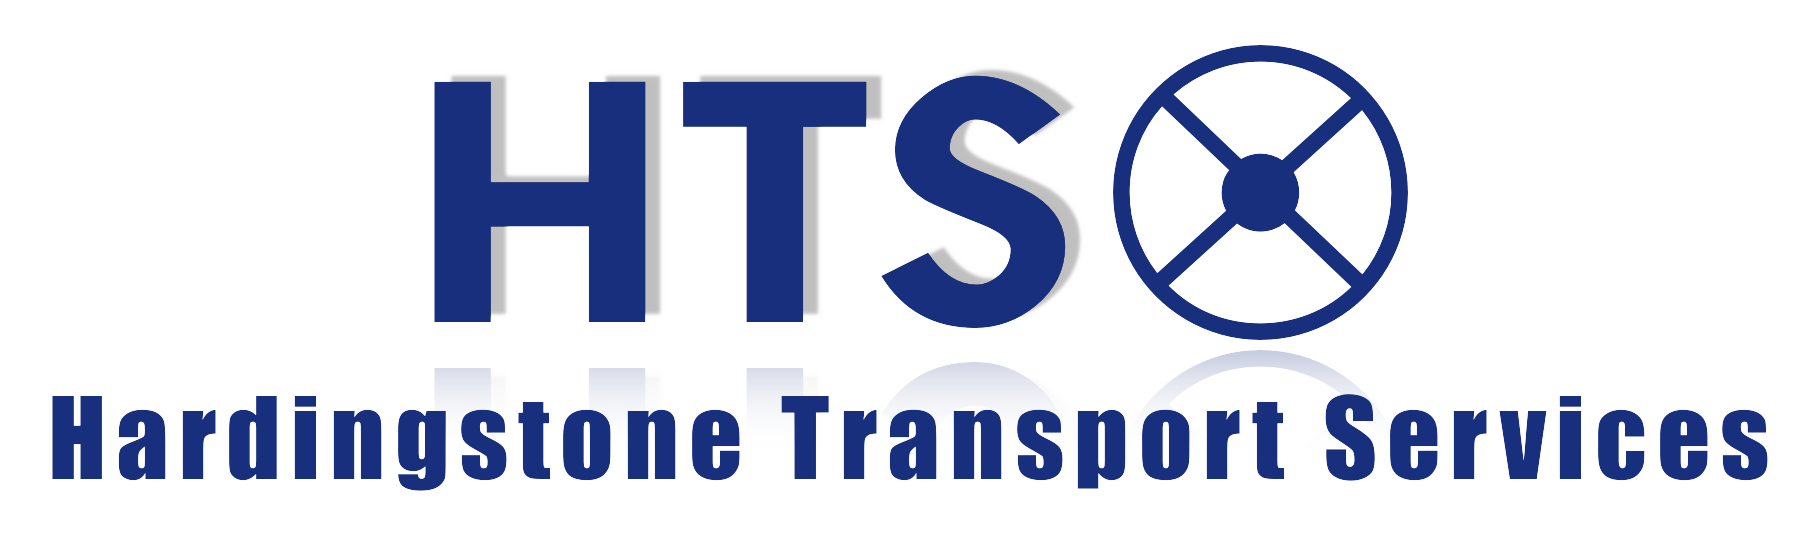 Hardingstone Trasnport Services|Tachograph Analysis Service